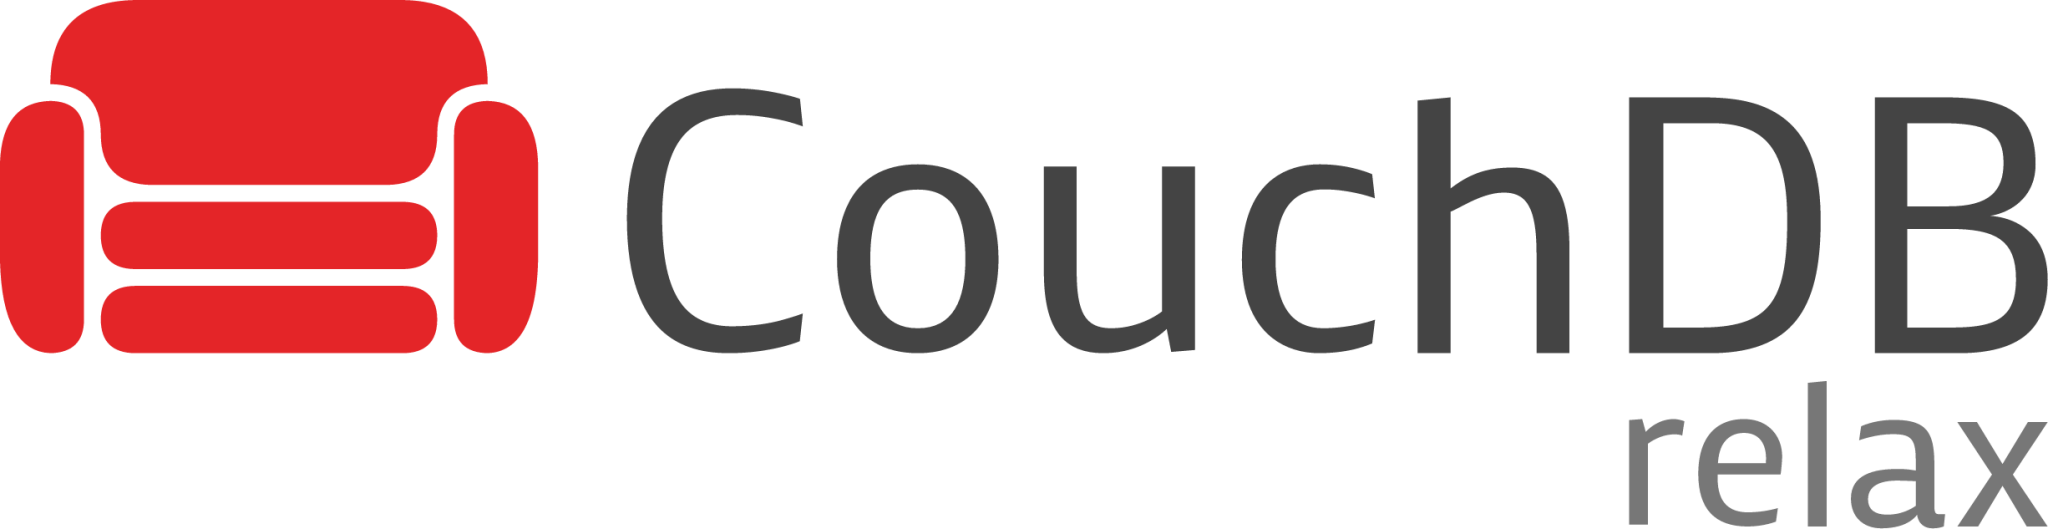 logotipo de couchdb